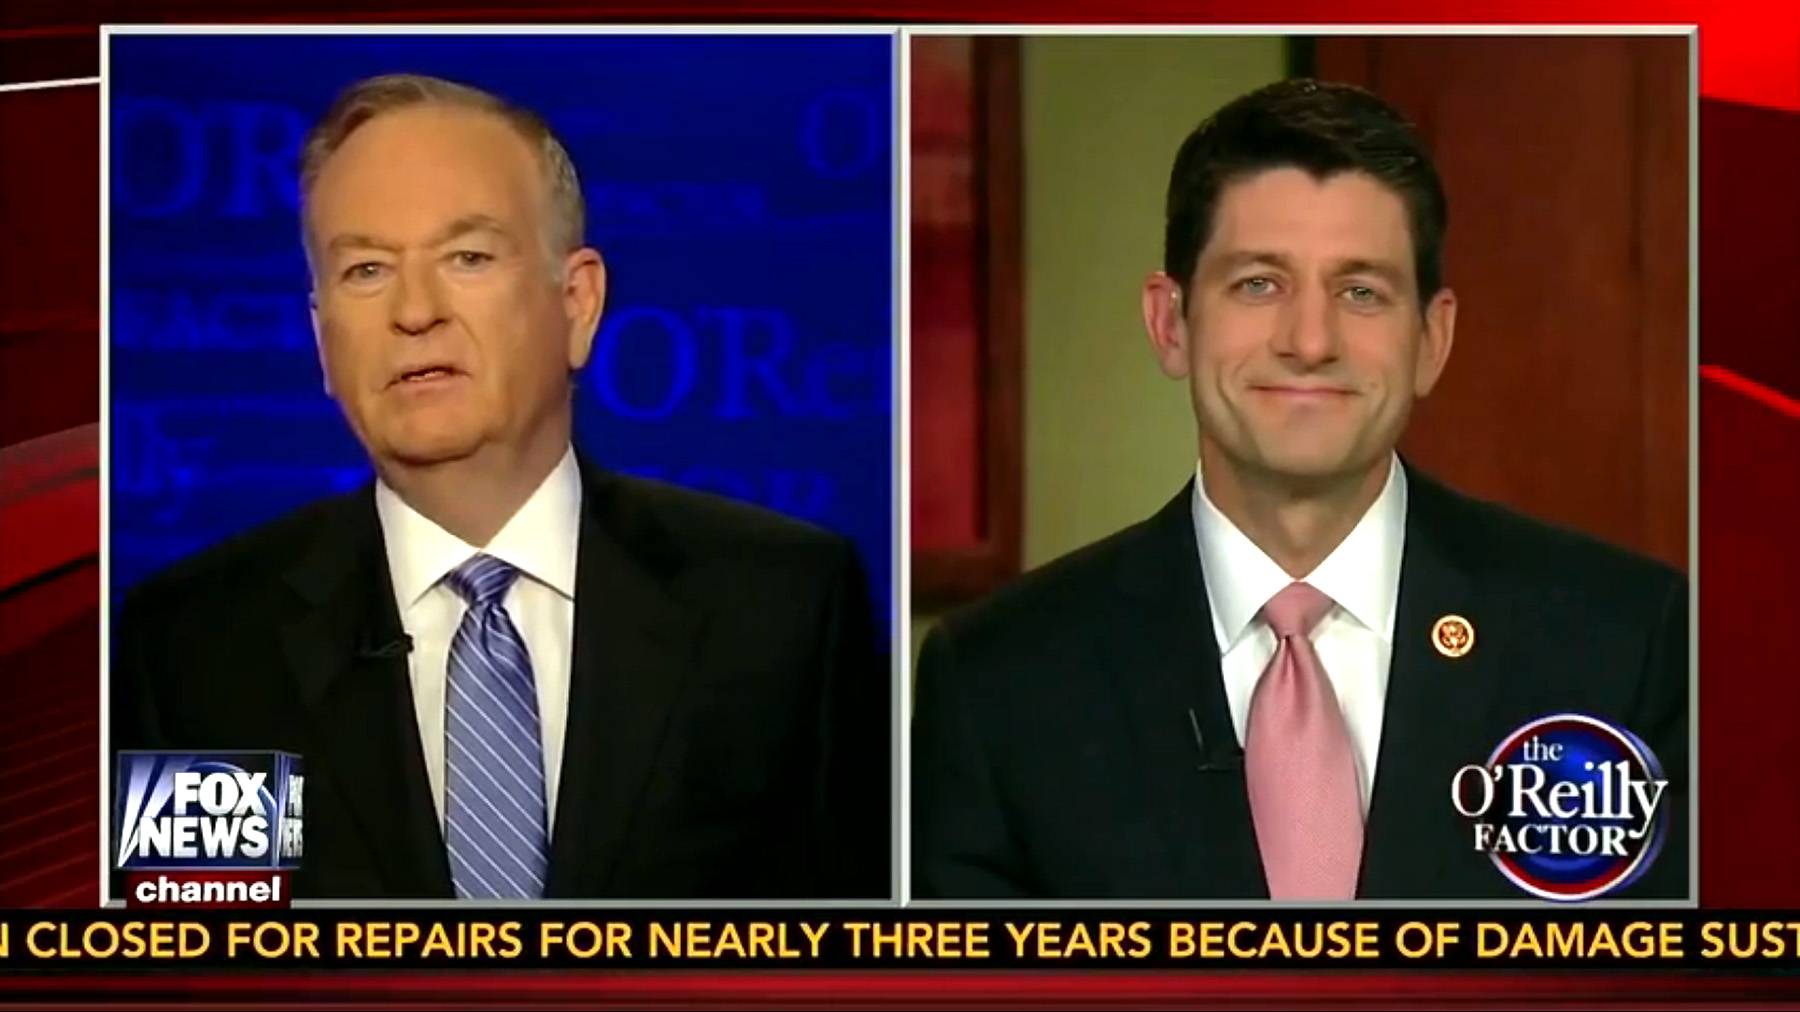 Bill O'Reilly, Paul Ryan